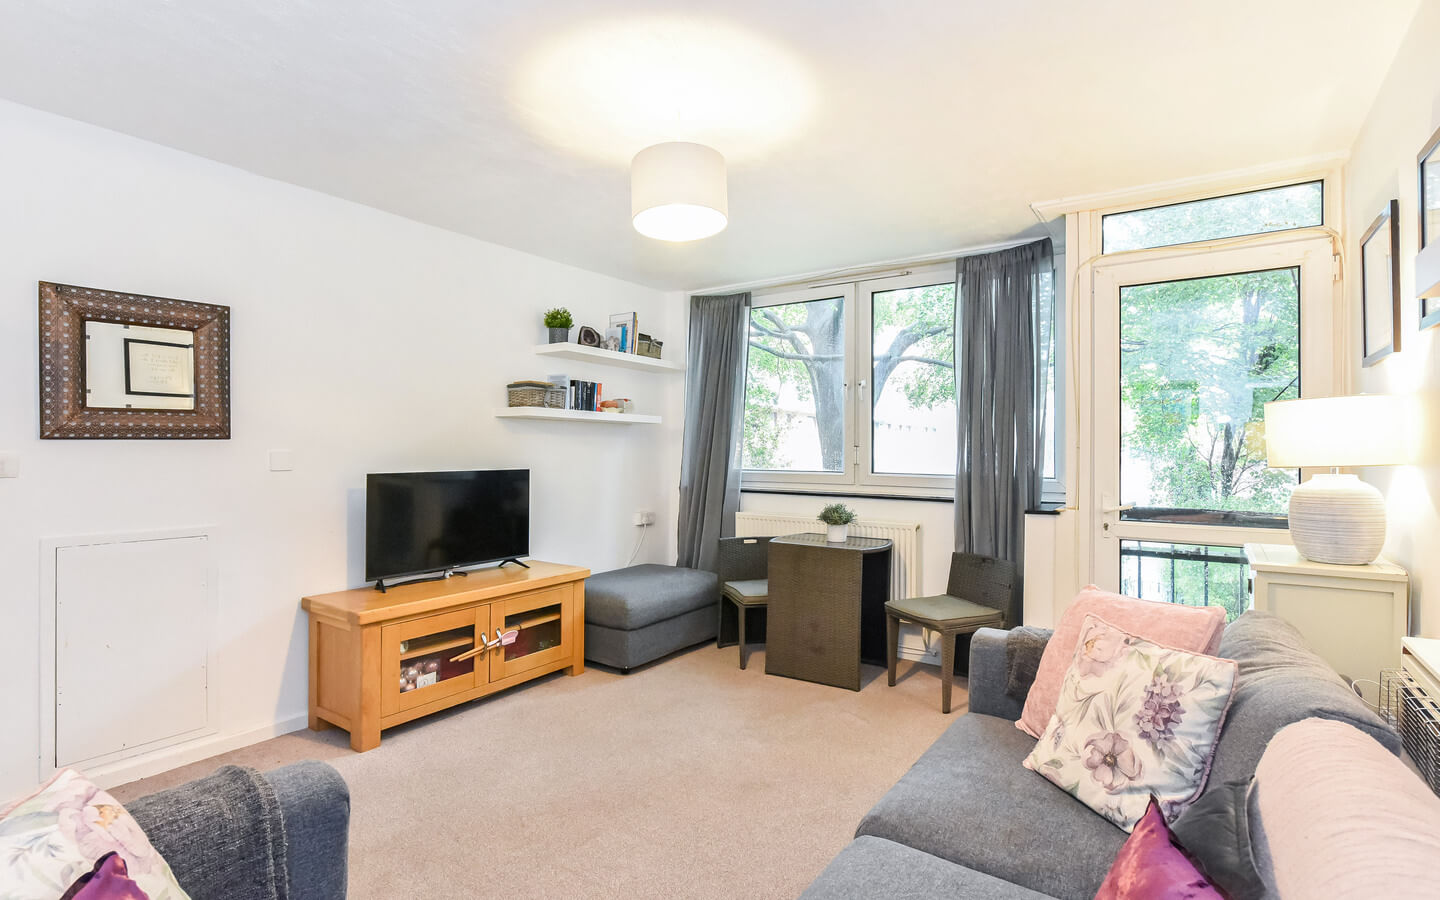 1 Bedroom Flat For Rent Islington London